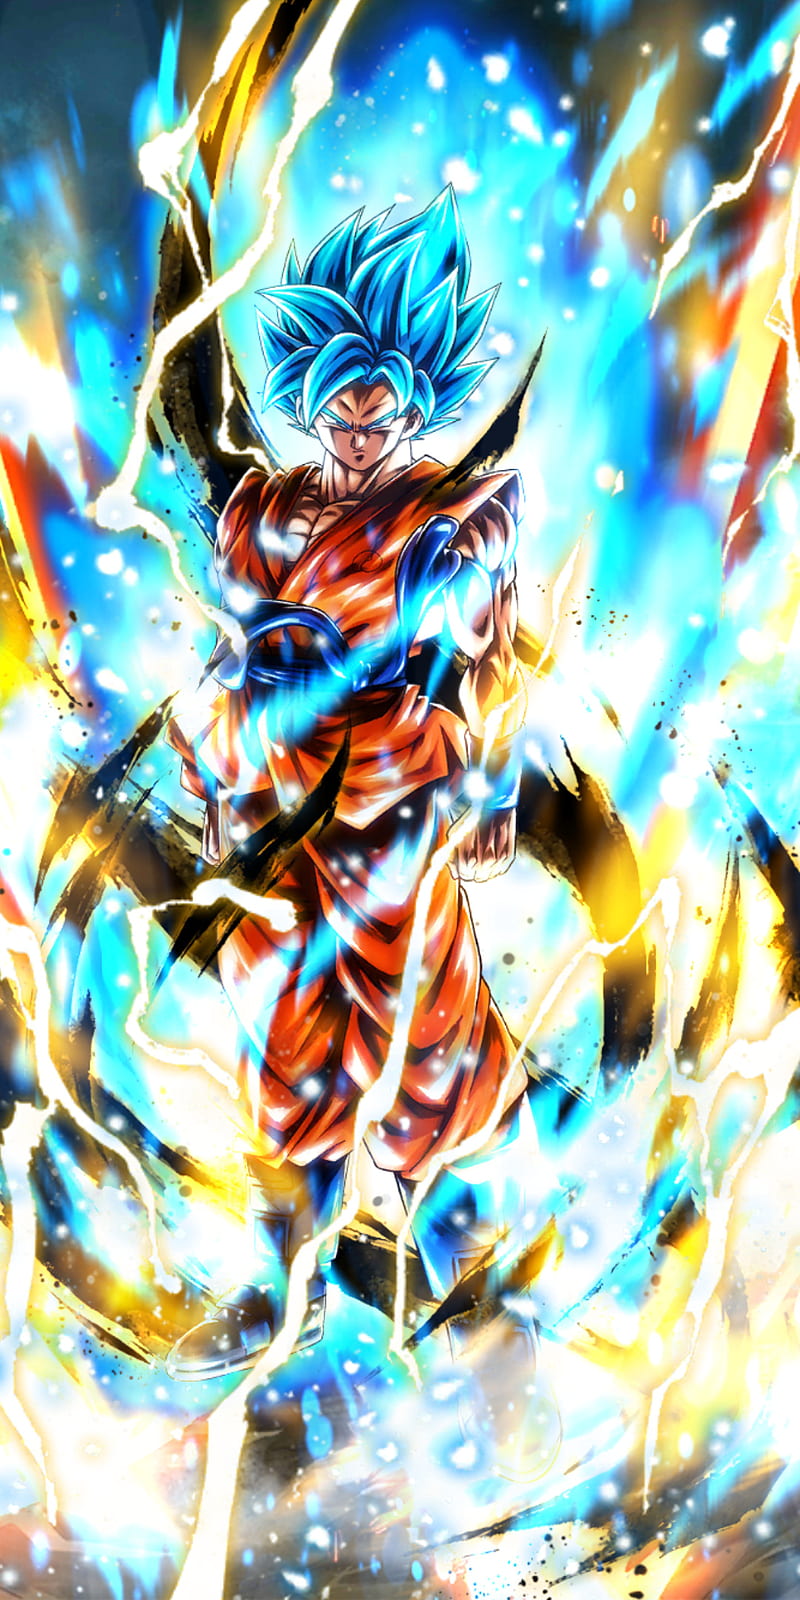 Top 999+ Goku Wallpaper Full HD, 4K✓Free to Use